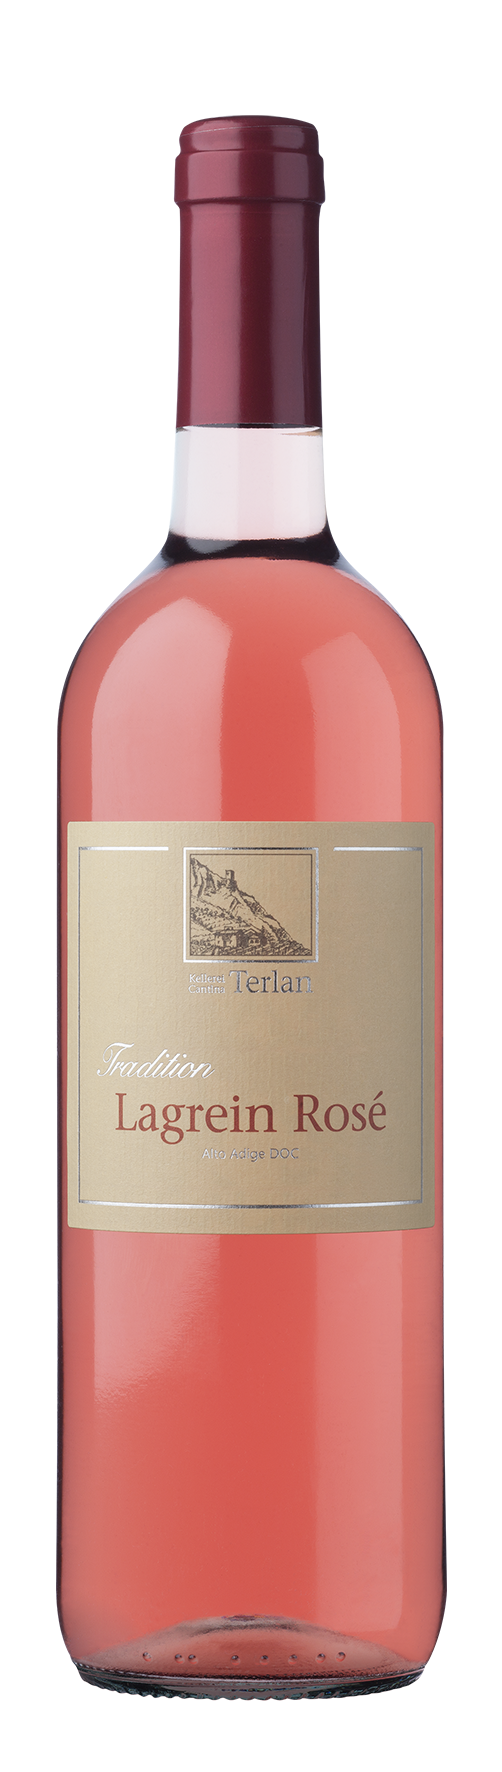 Cantina Terlano - Lagrein Rose 2020 (750ml) (750ml)